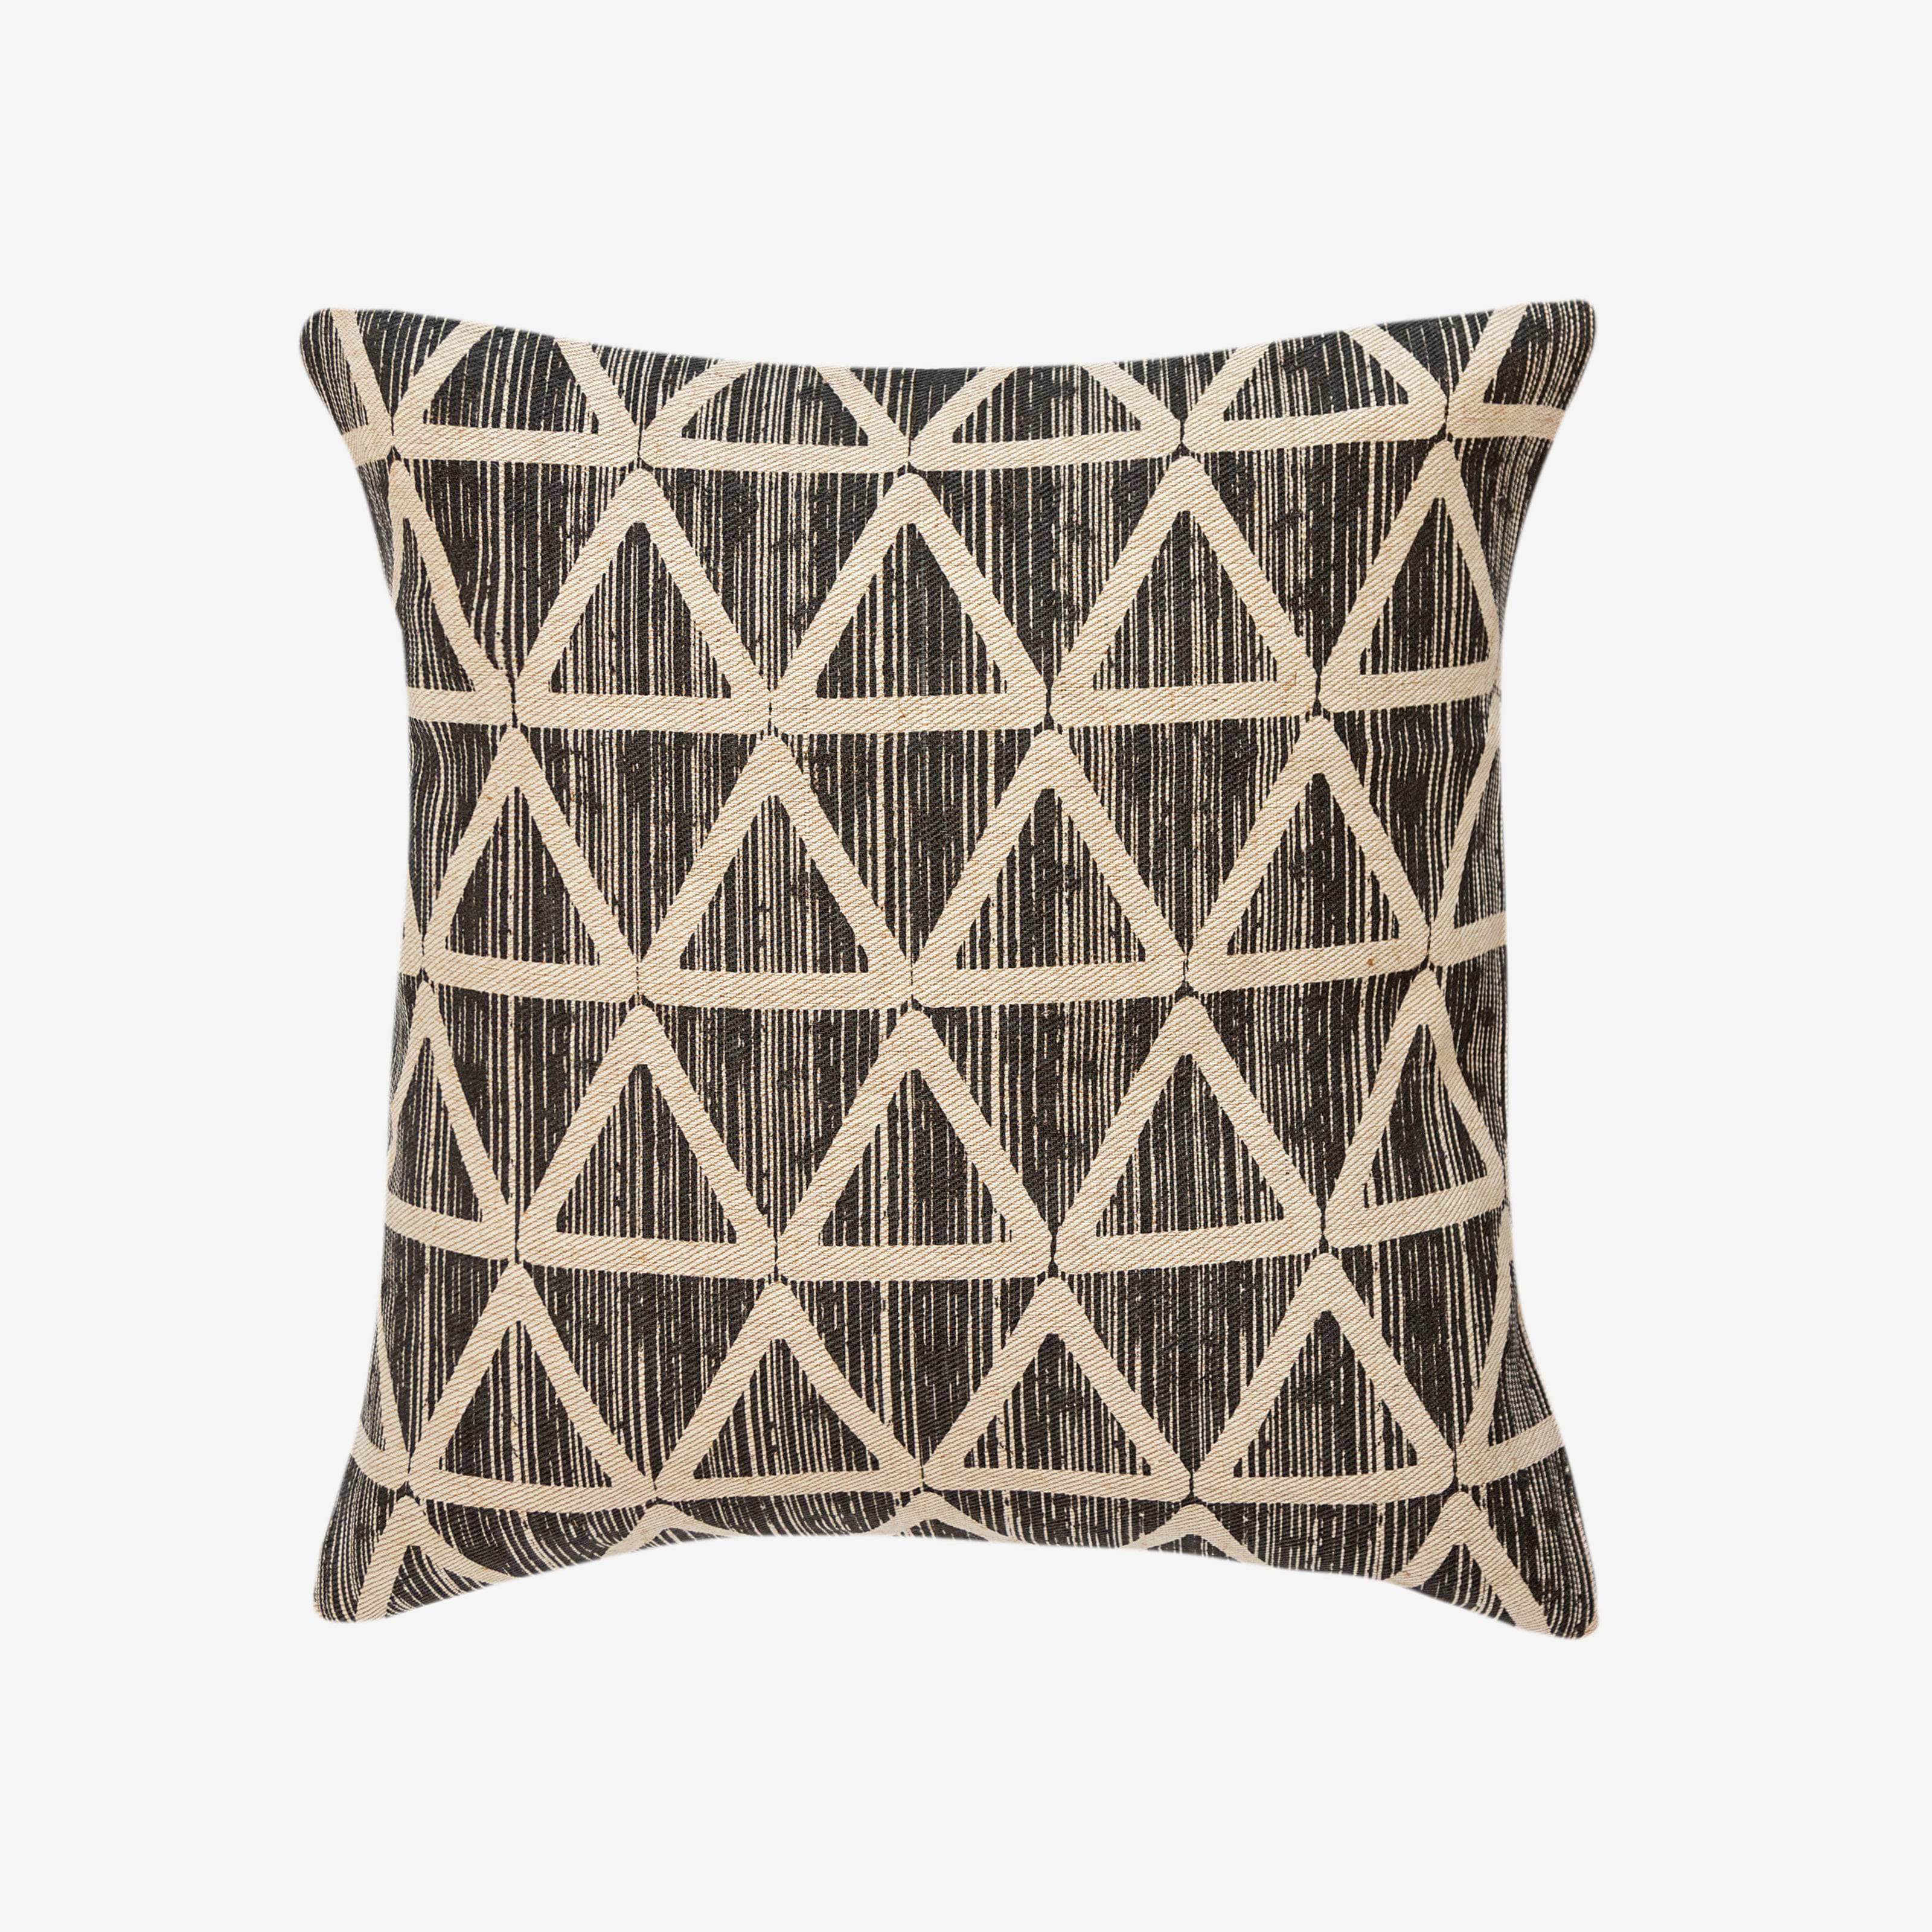 Print Triangle Aztec Mono On Textured Jute Fabric, Multicoloured, 45x45 cm 1